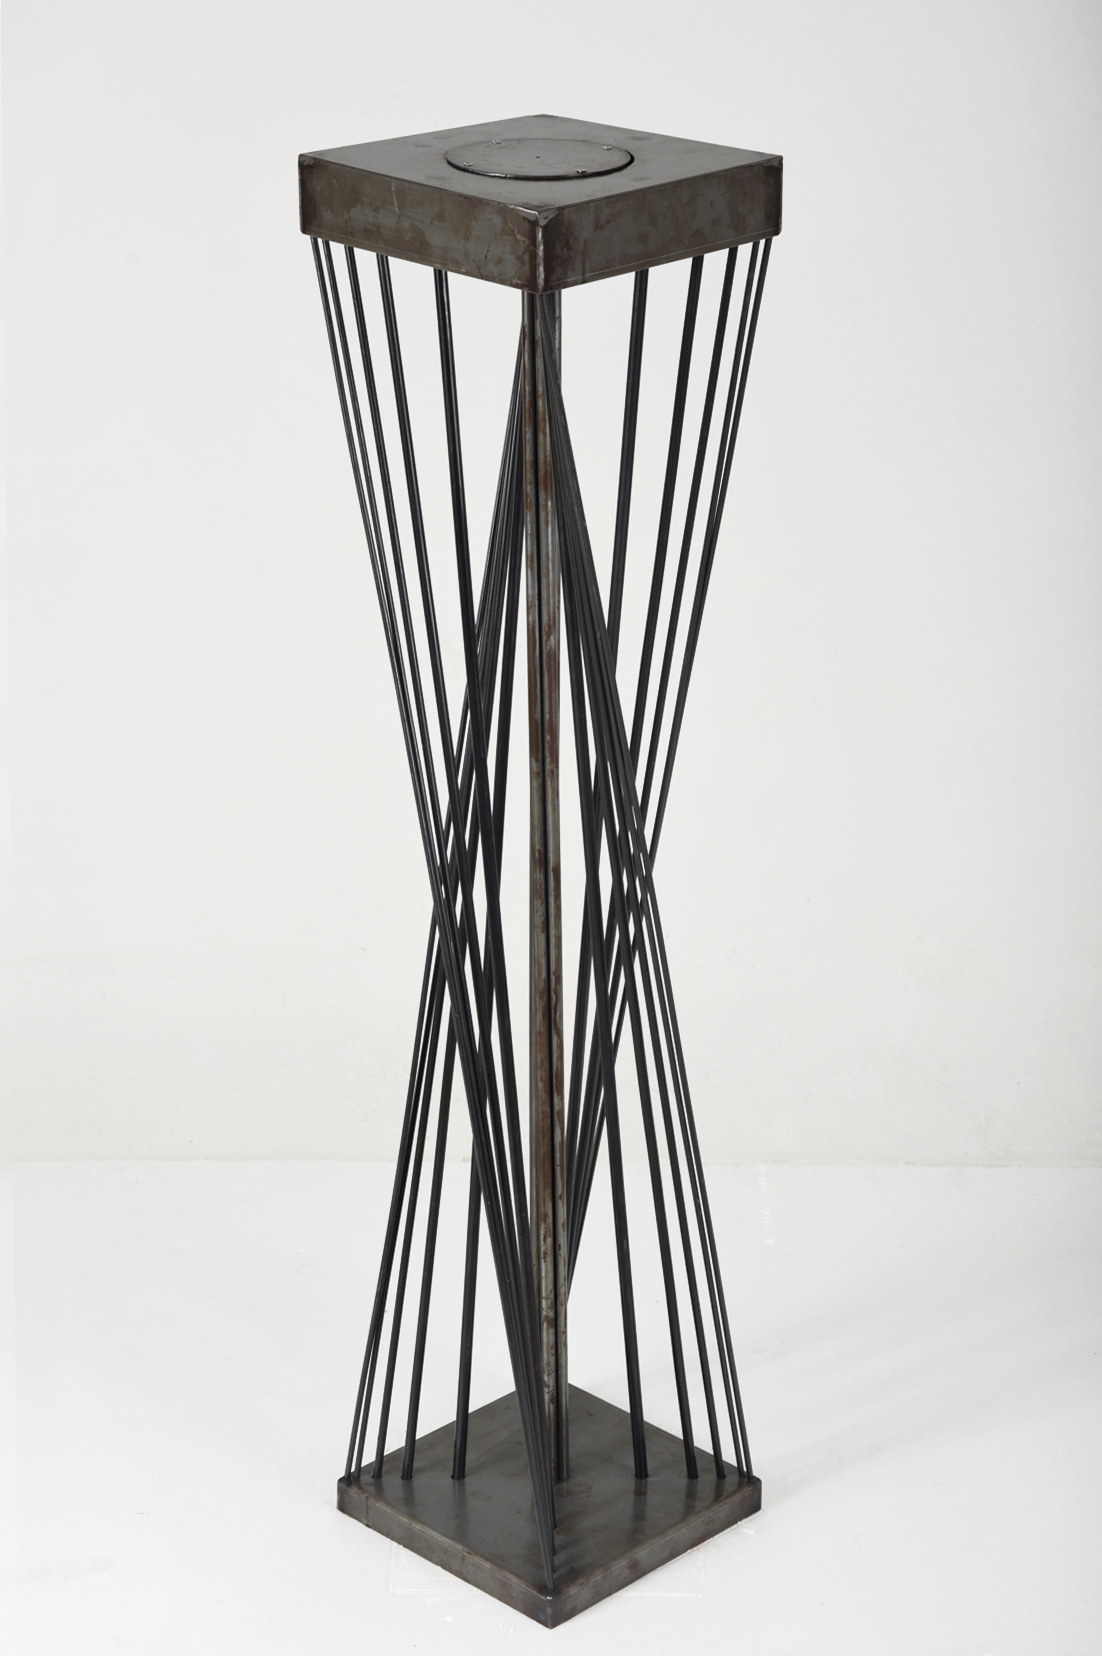 kurvo - Iron Table with  rotating turntable  for vase  - 2 - 2016 - £750.jpg